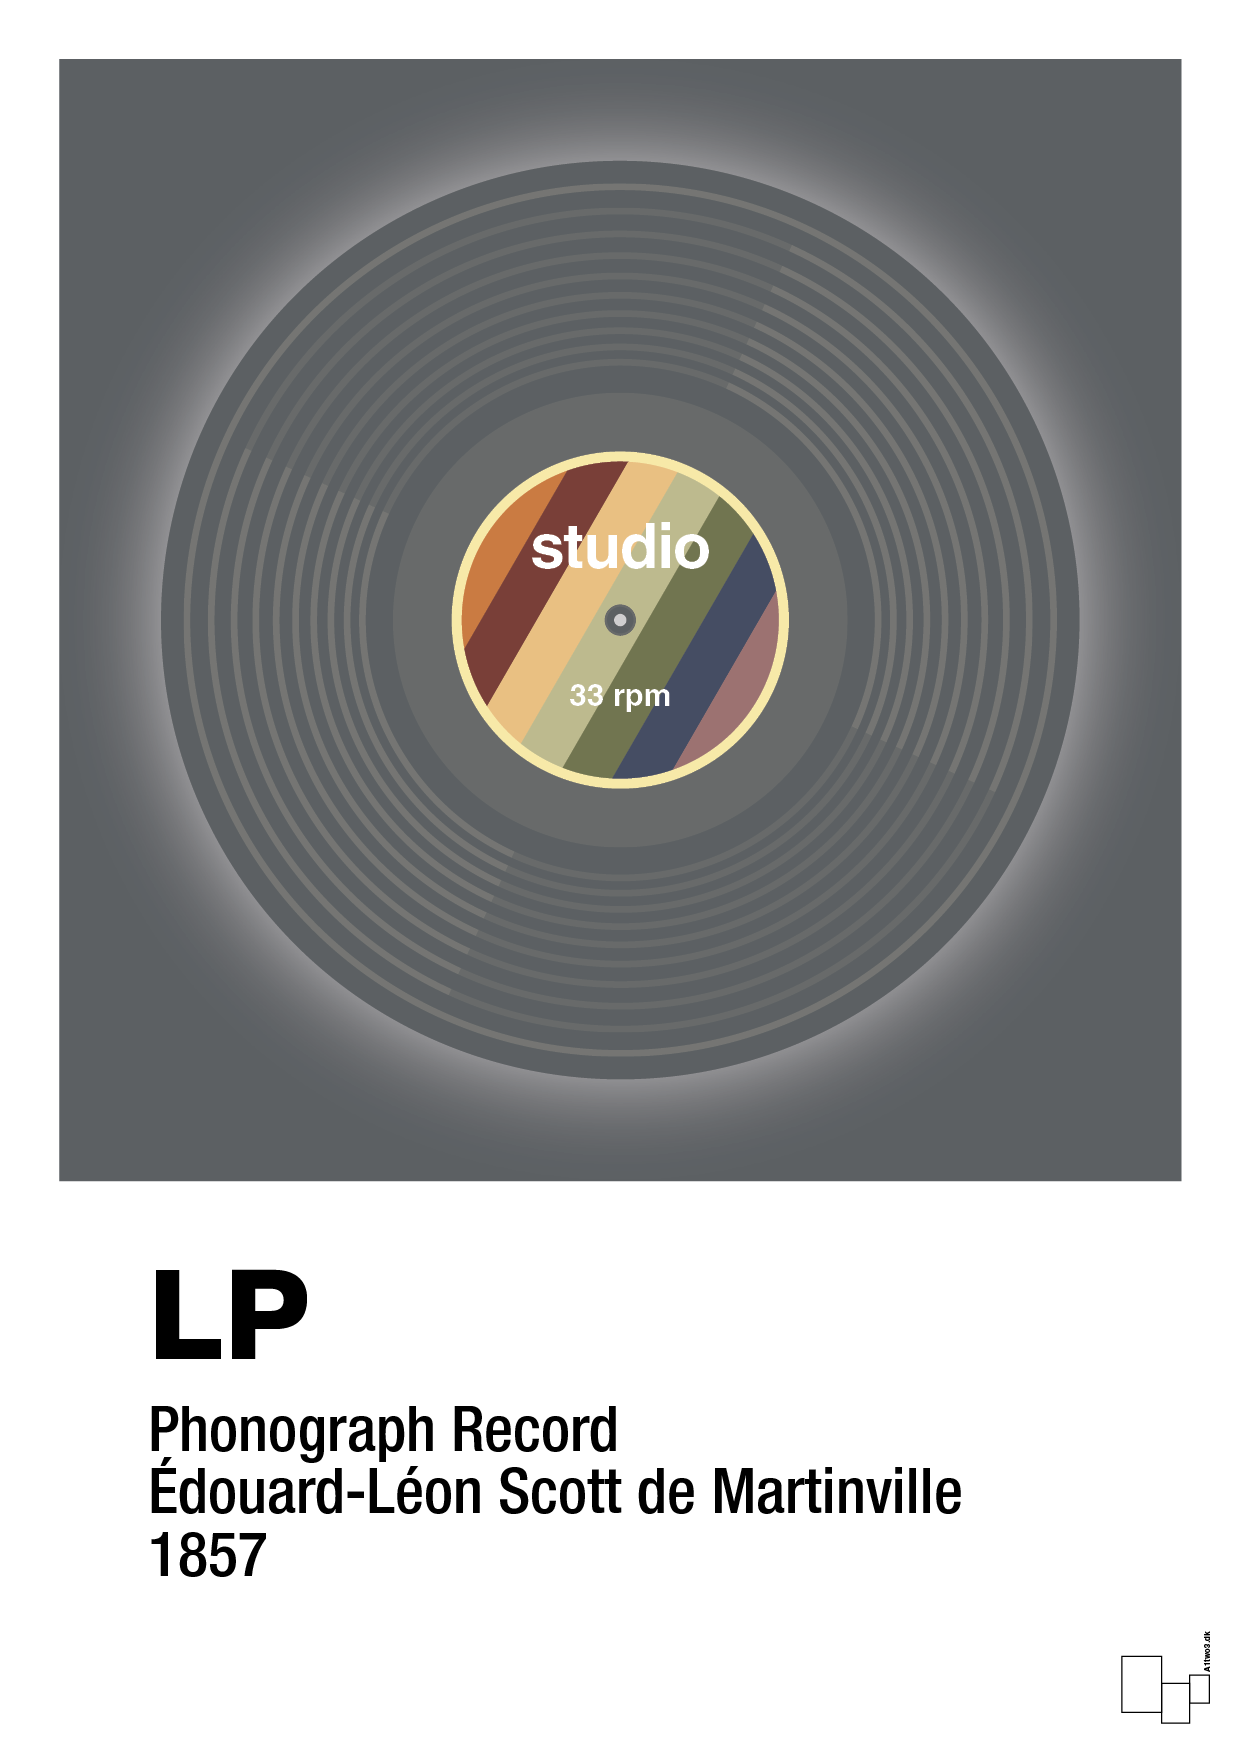 vinylplade 33rpm - Plakat med Grafik i Graphic Charcoal